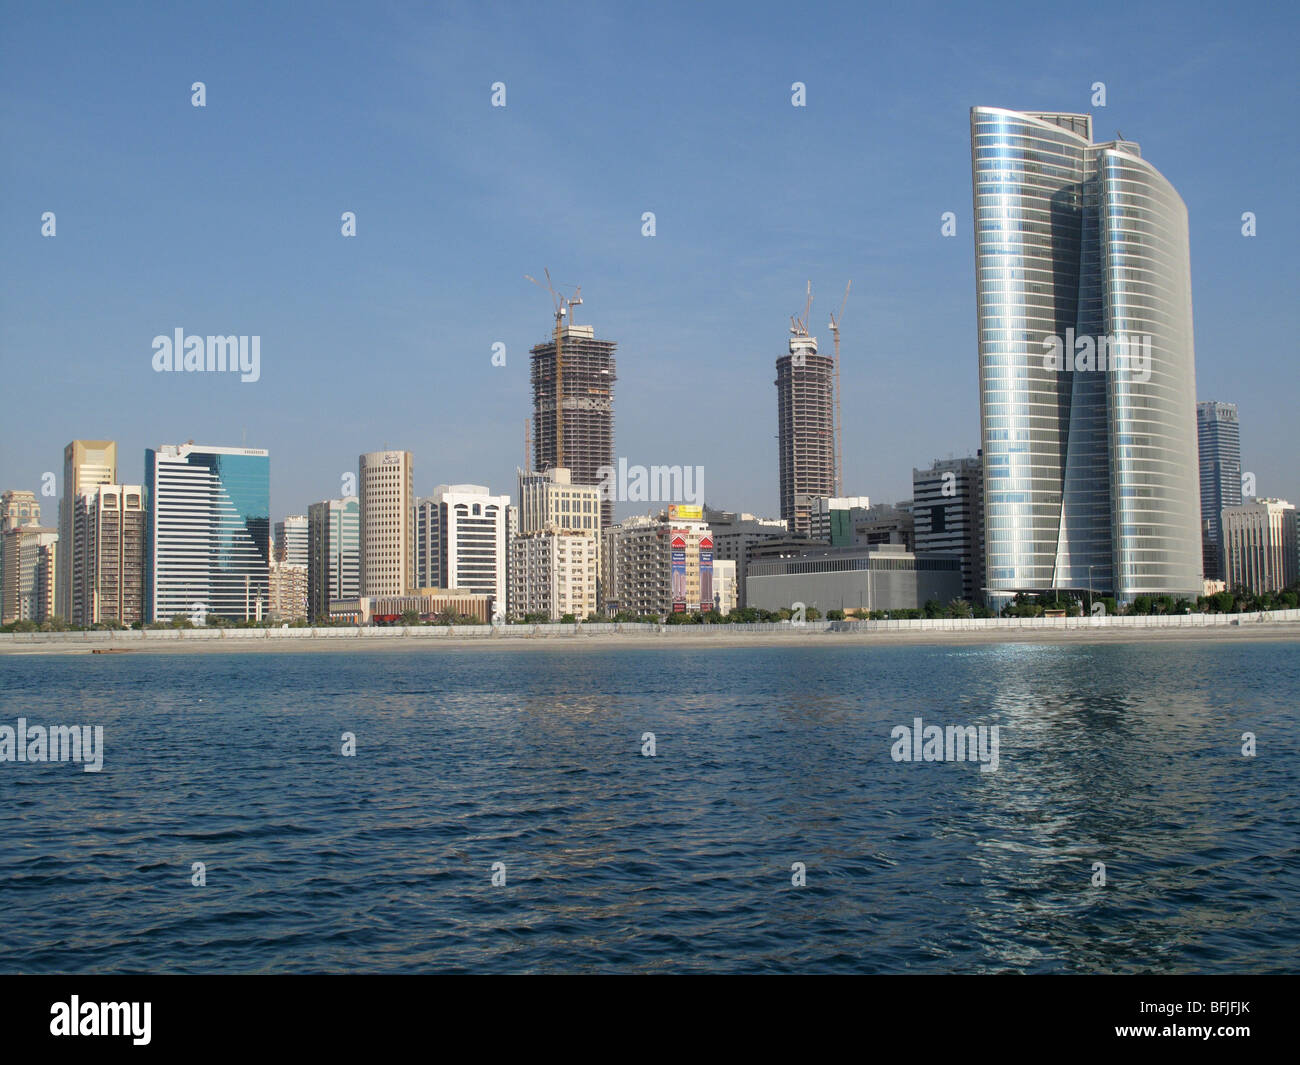 Modern tall buildings on the Corniche seafront, Abu Dhabi, UAE Stock Photo